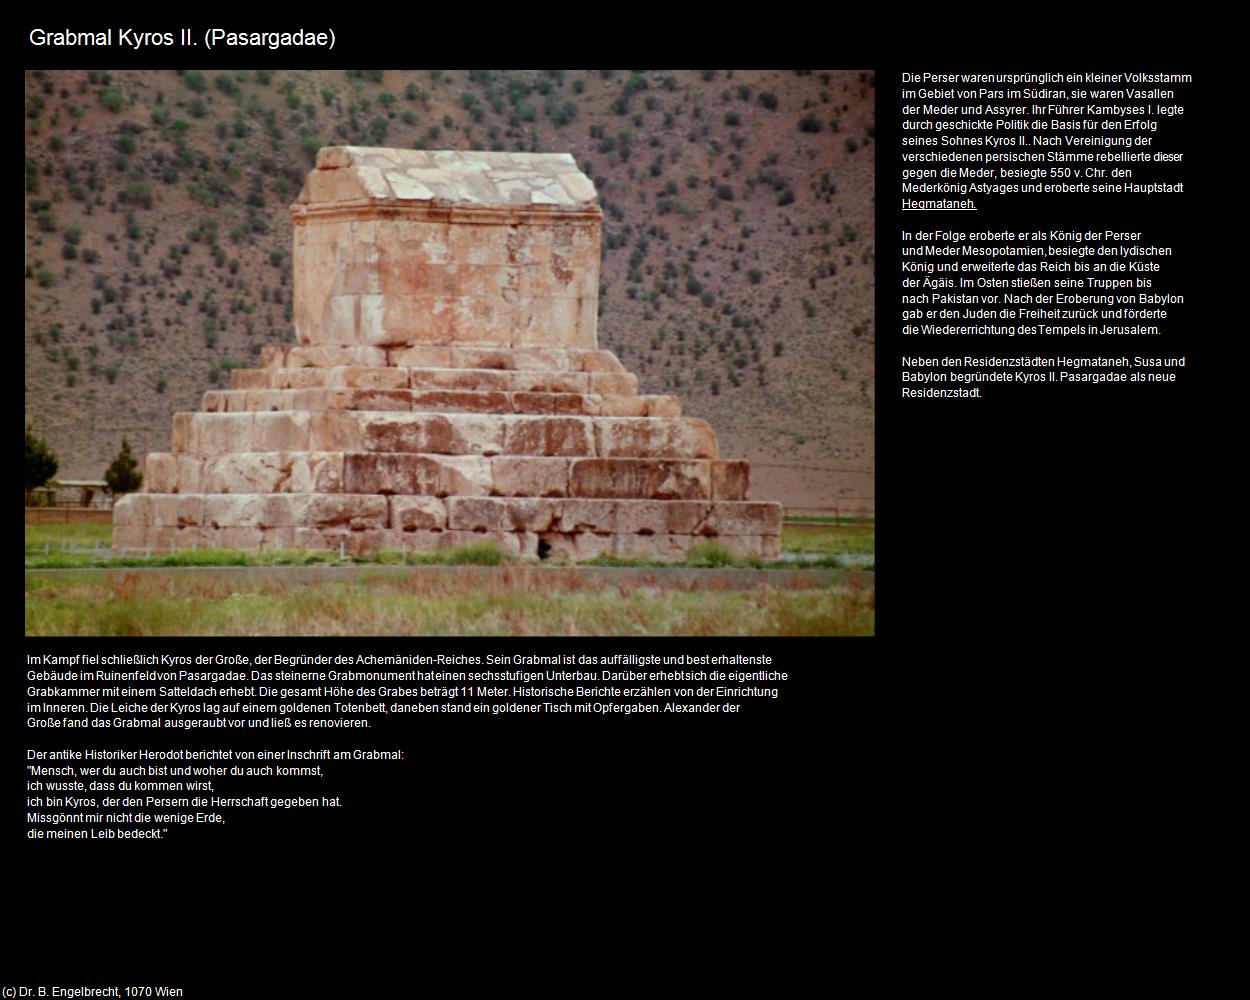 Grabmal Kyros II. (Pasargadae) in Iran(c)B.Engelbrecht